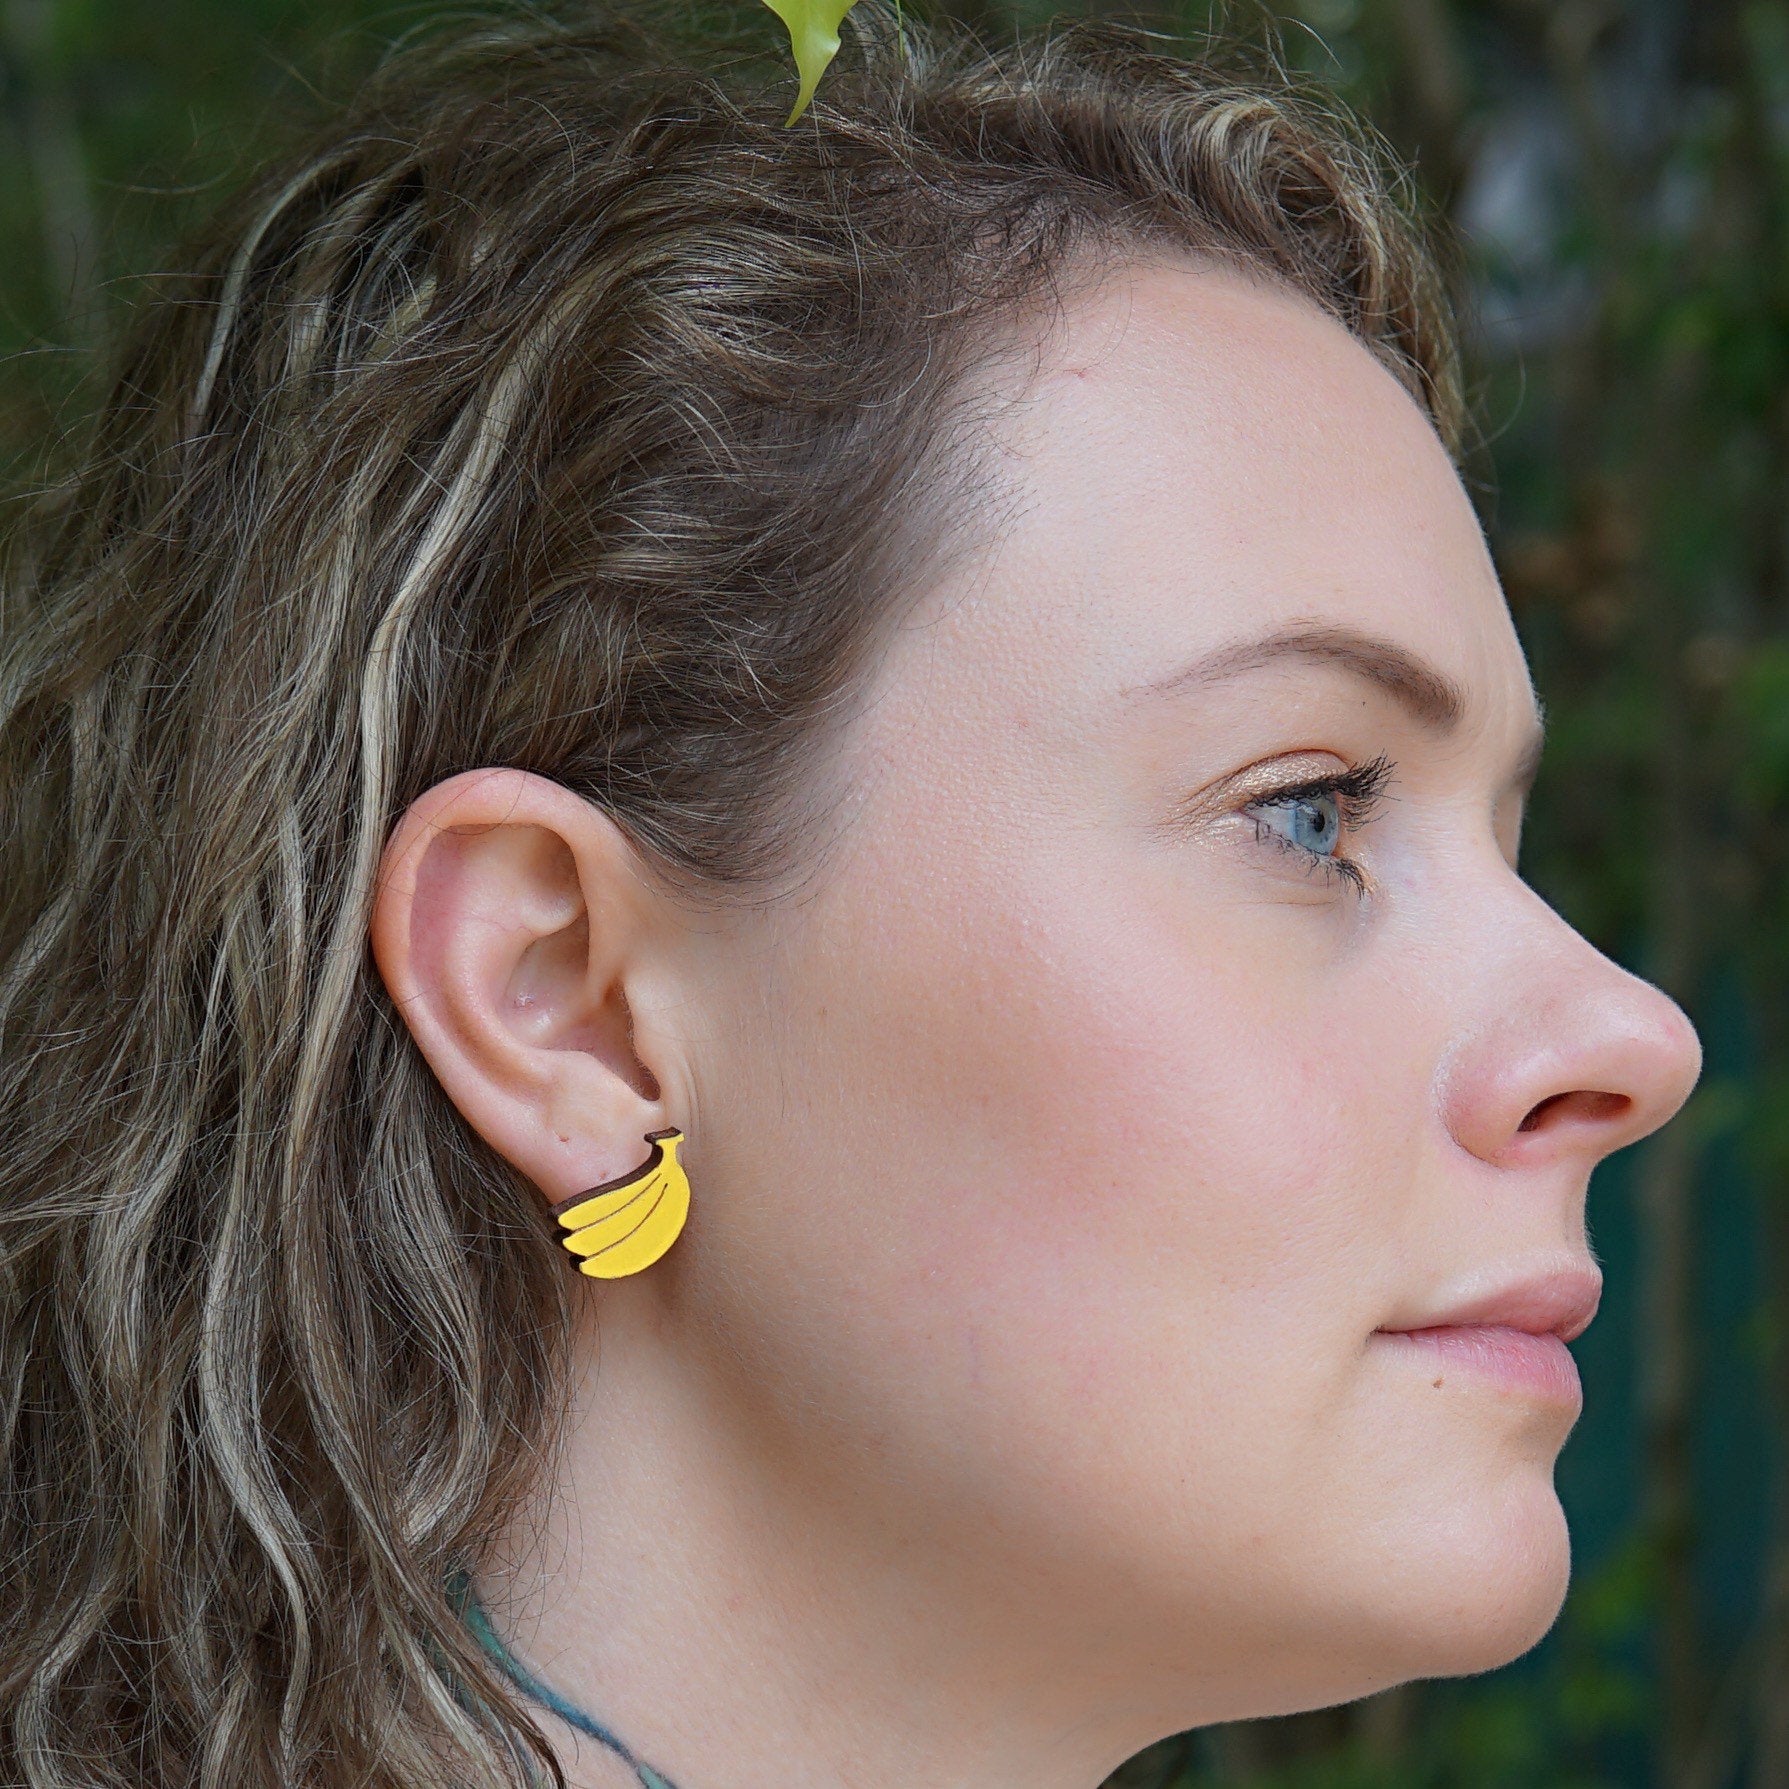 Girl wearing banana earrings